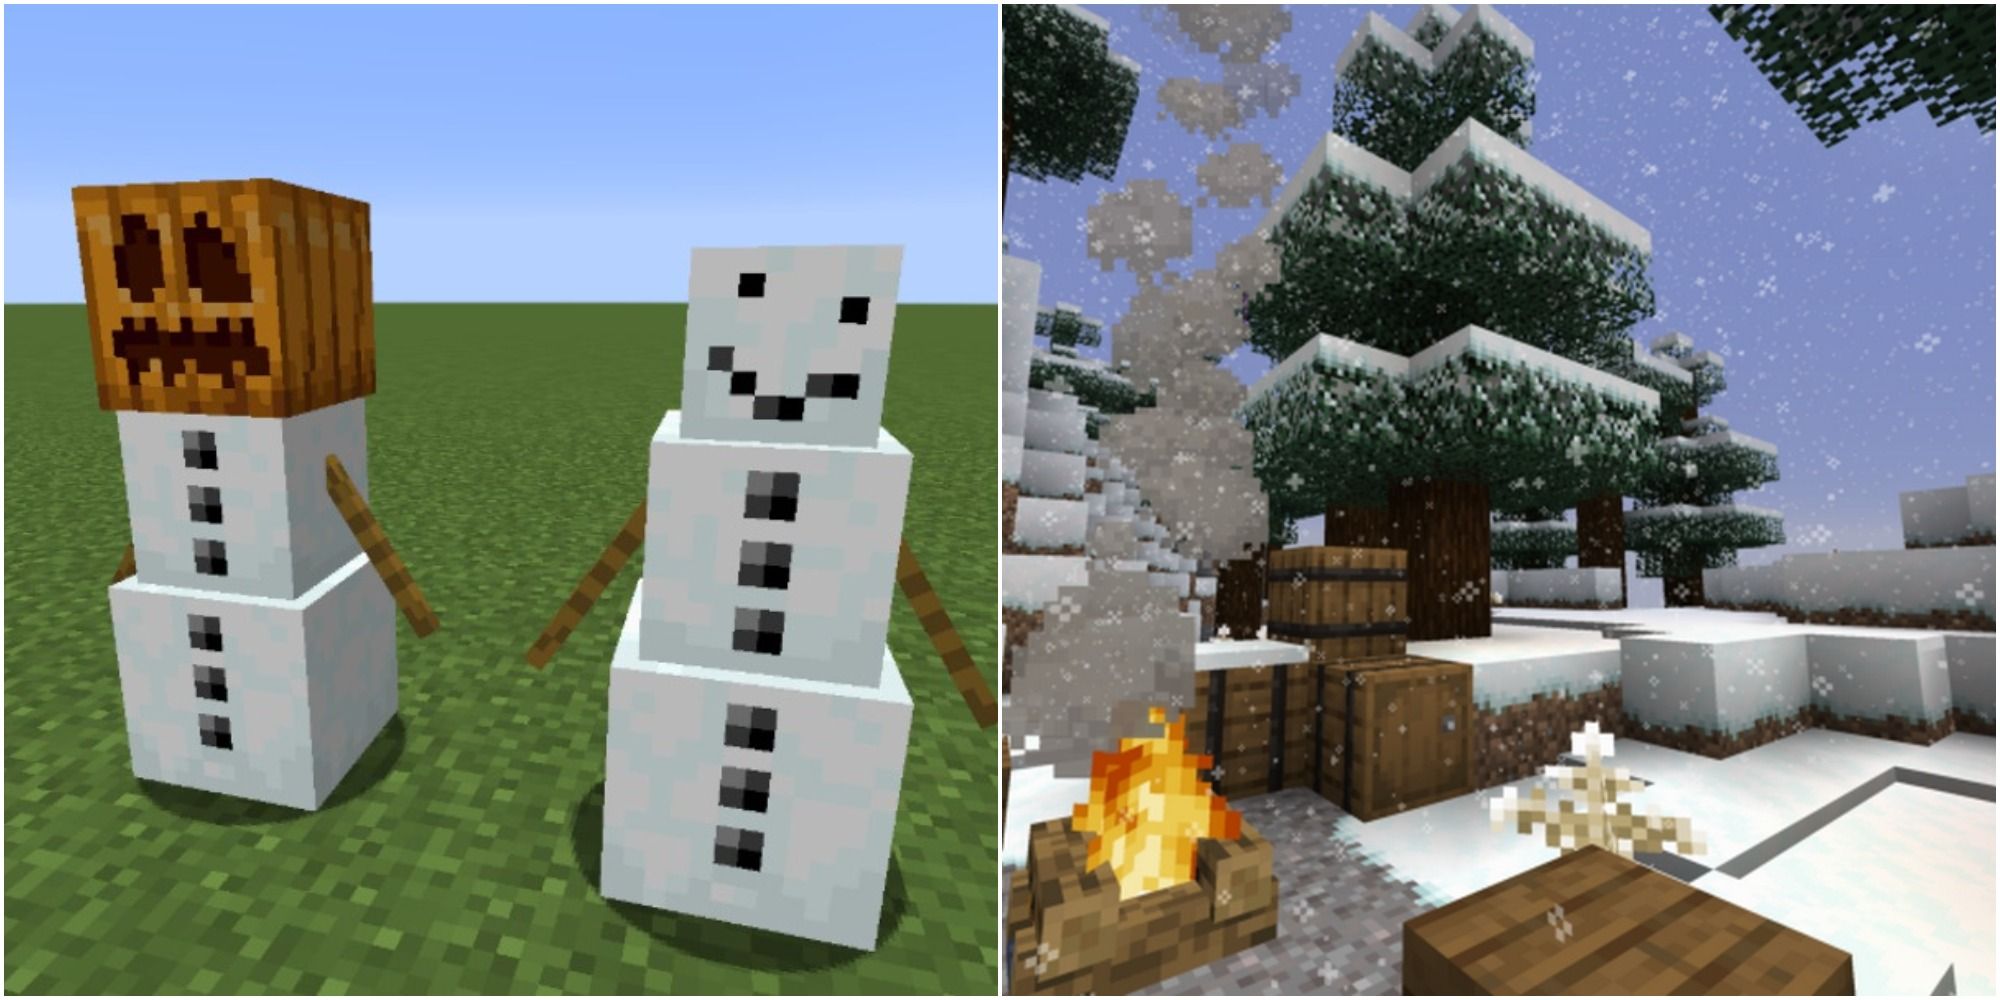 Minecraft split image of snow man snow golem and snowy wilderness with campfire